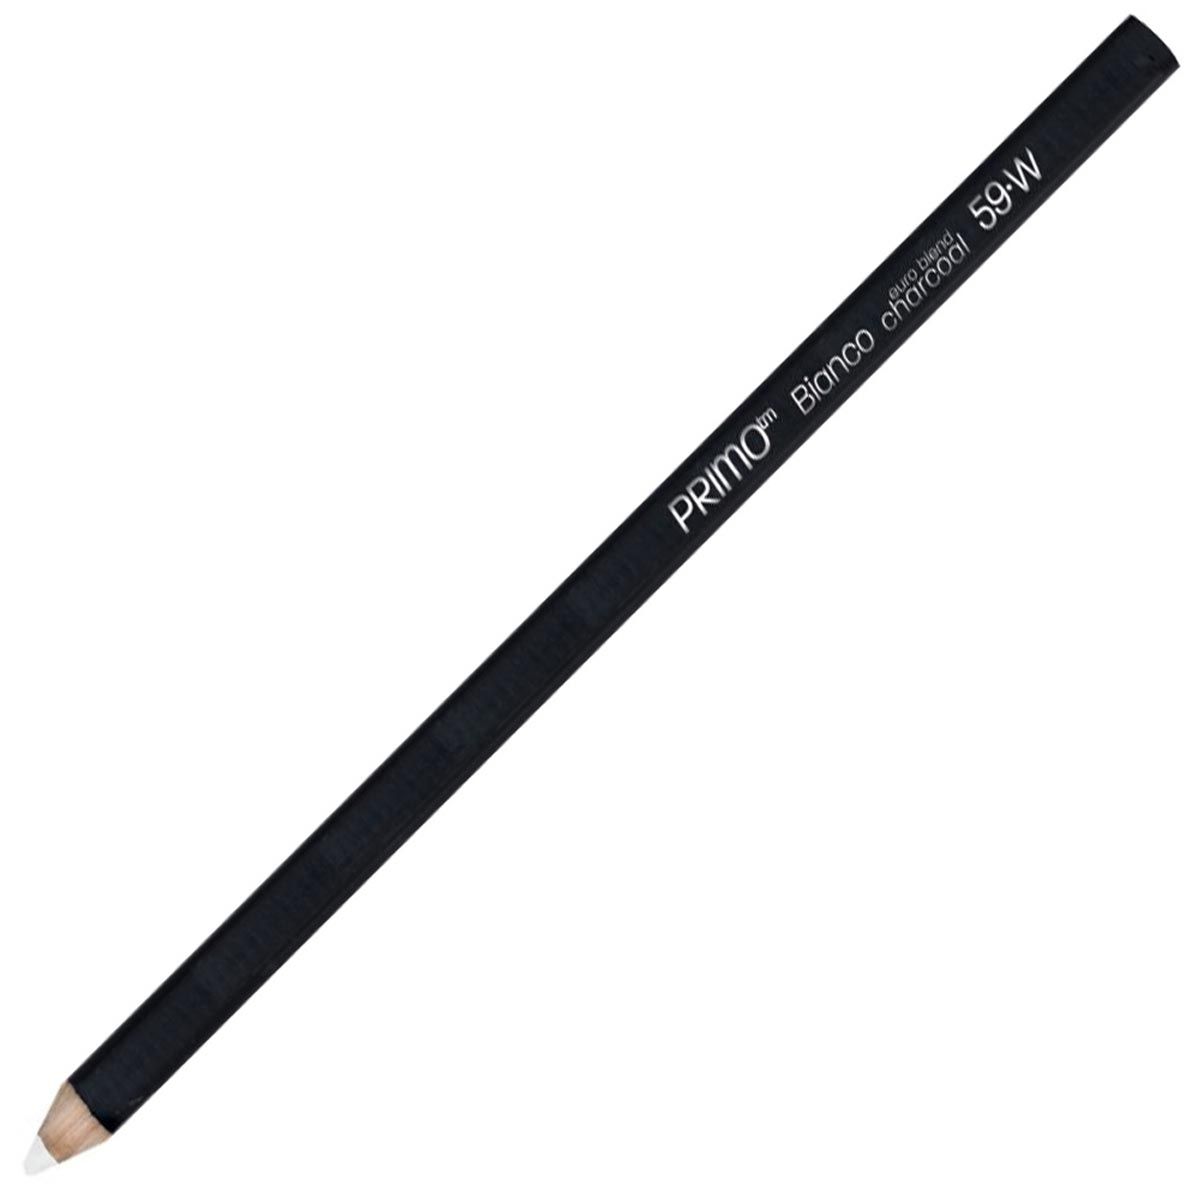 Primo Euro Blend Charcoal Pencil - Bianco (White)